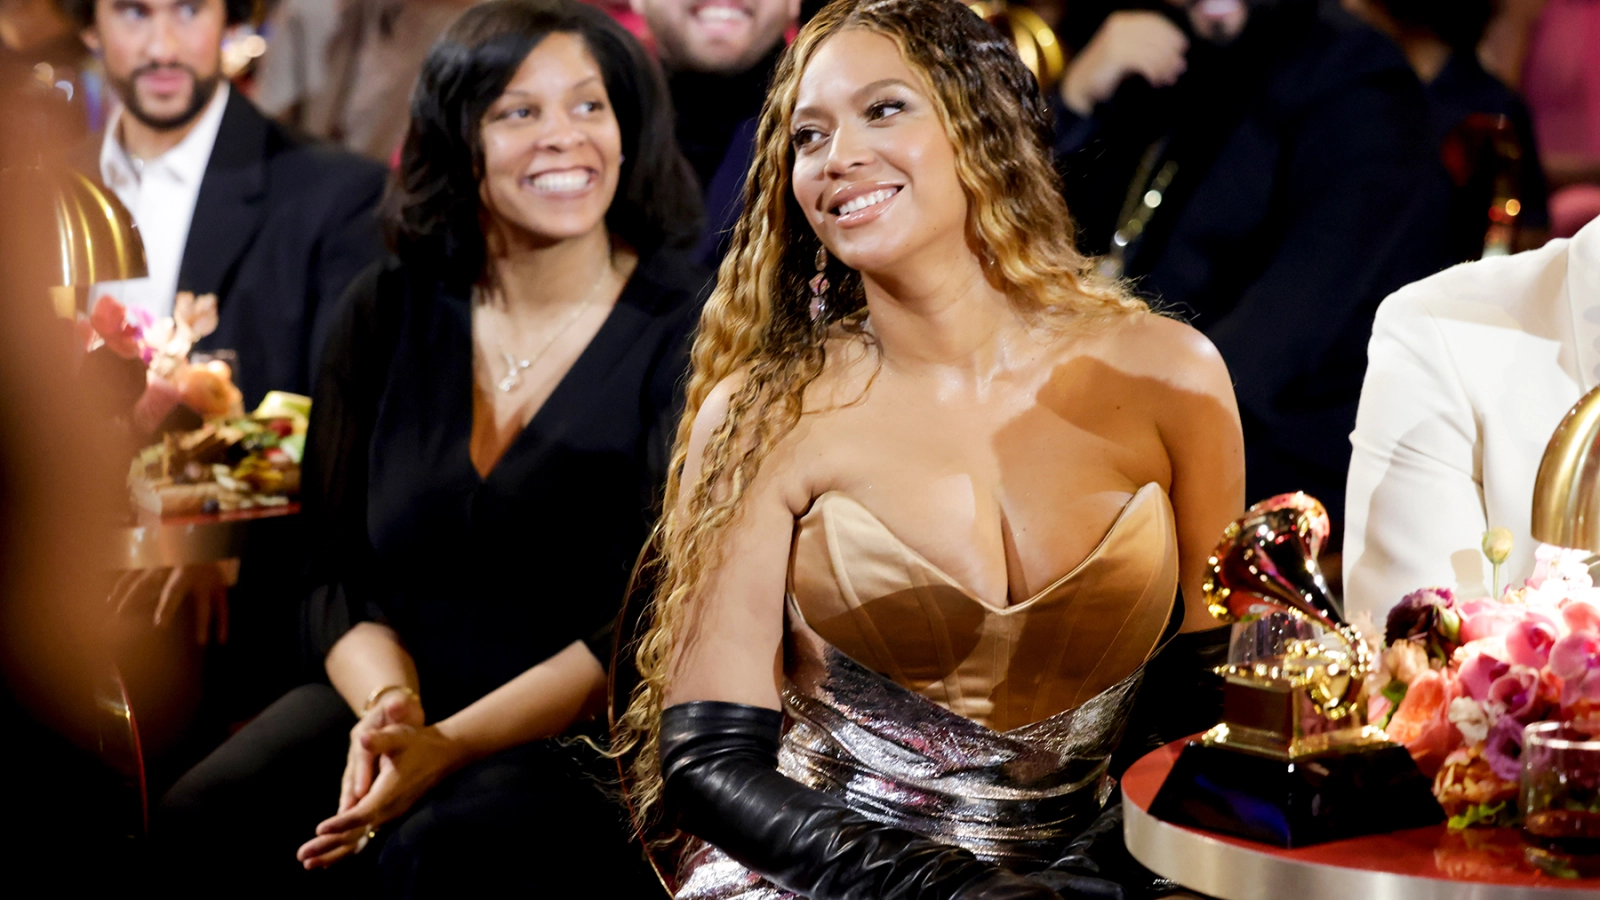 Beyonce Wins Dance/Electronic Album Grammy